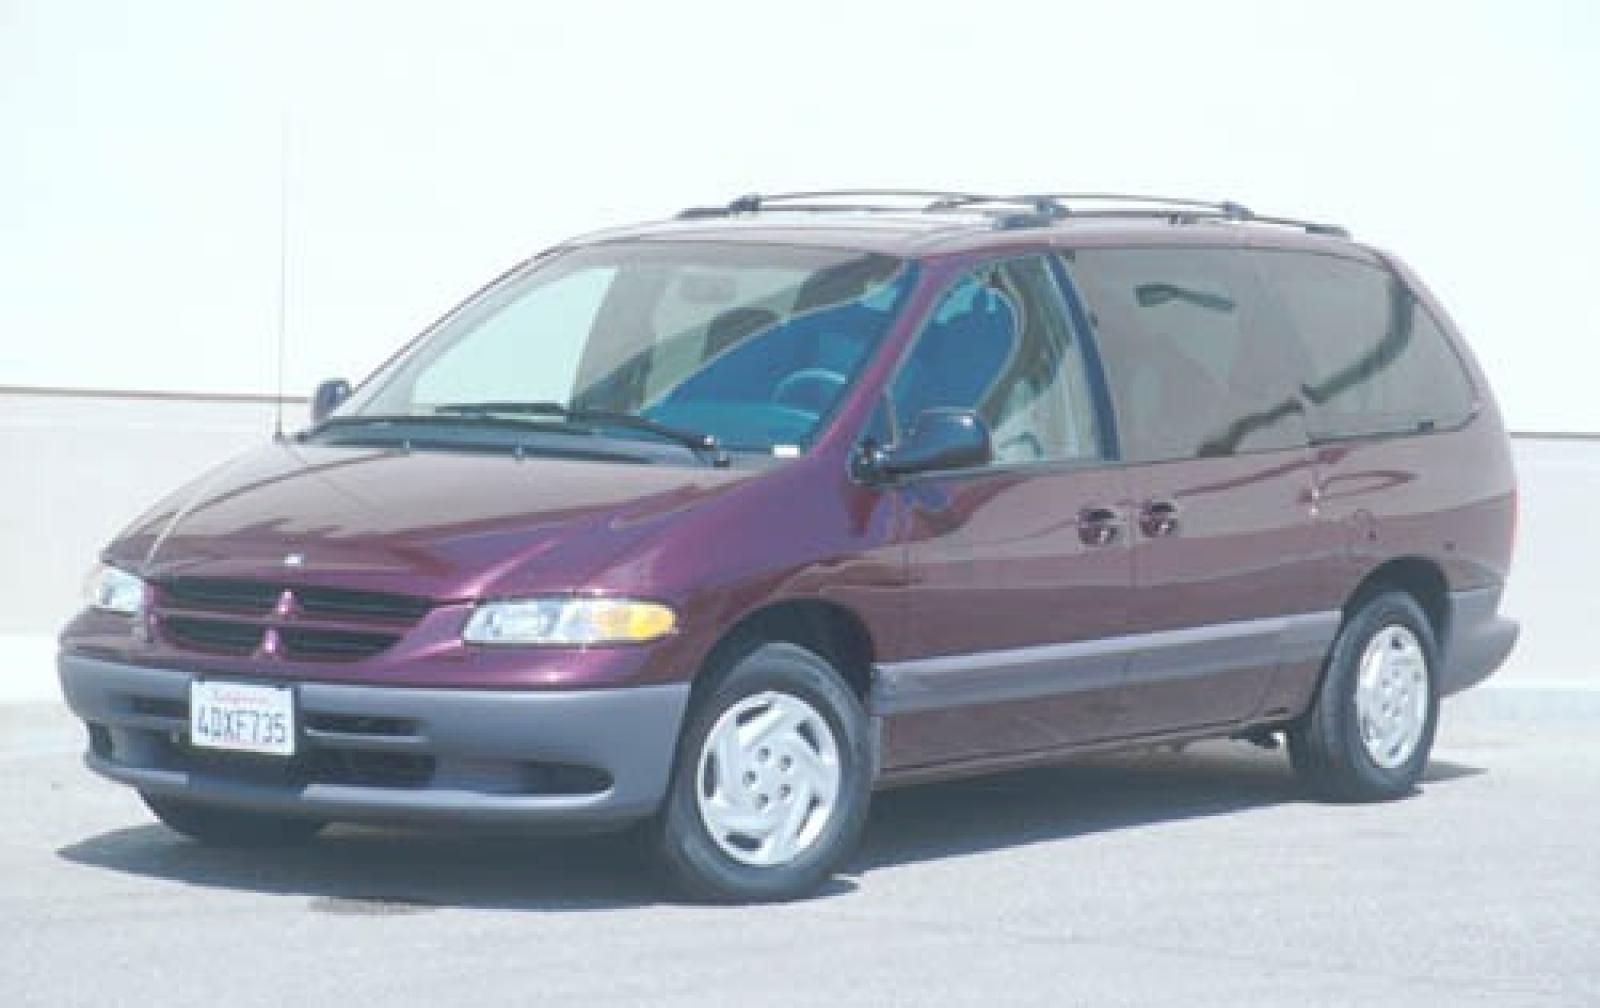 Додж караван 2000 года. Dodge /Grand/ Caravan 1999. Dodge Caravan 2000. Dodge Caravan 1999. Додж Караван 1999.